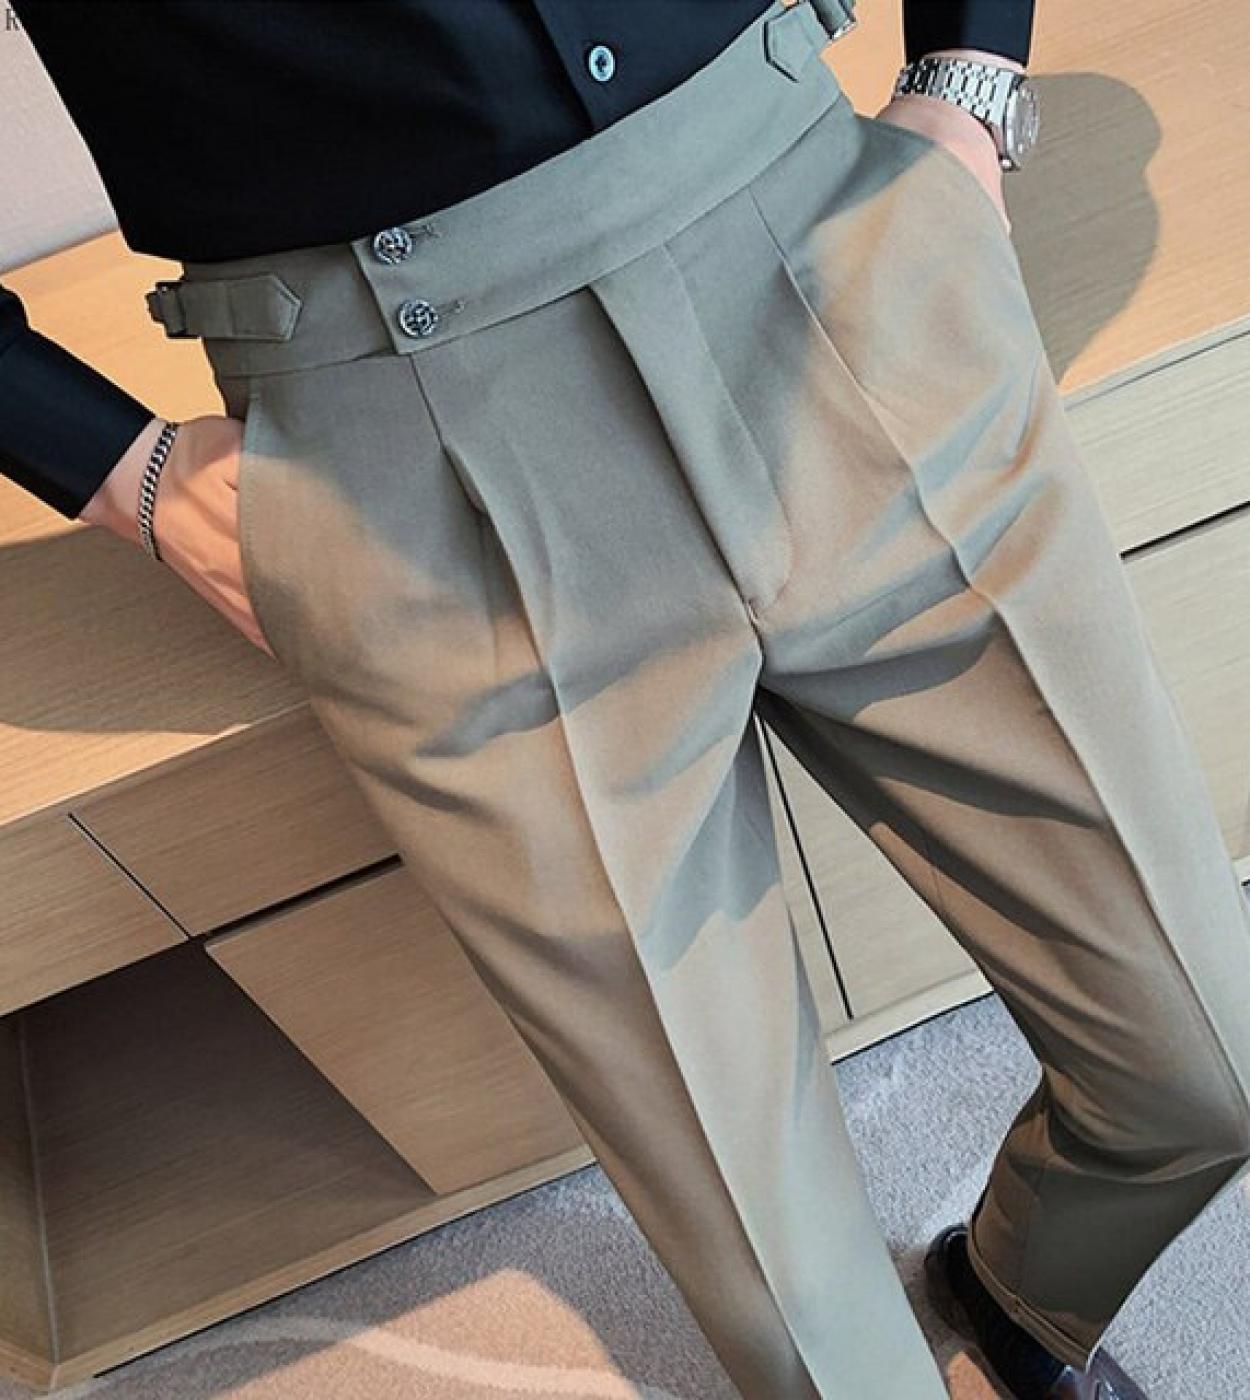 Dress Casual Pants|men's Slim Fit Stretch Dress Pants - Casual Zipper Fly  Trousers